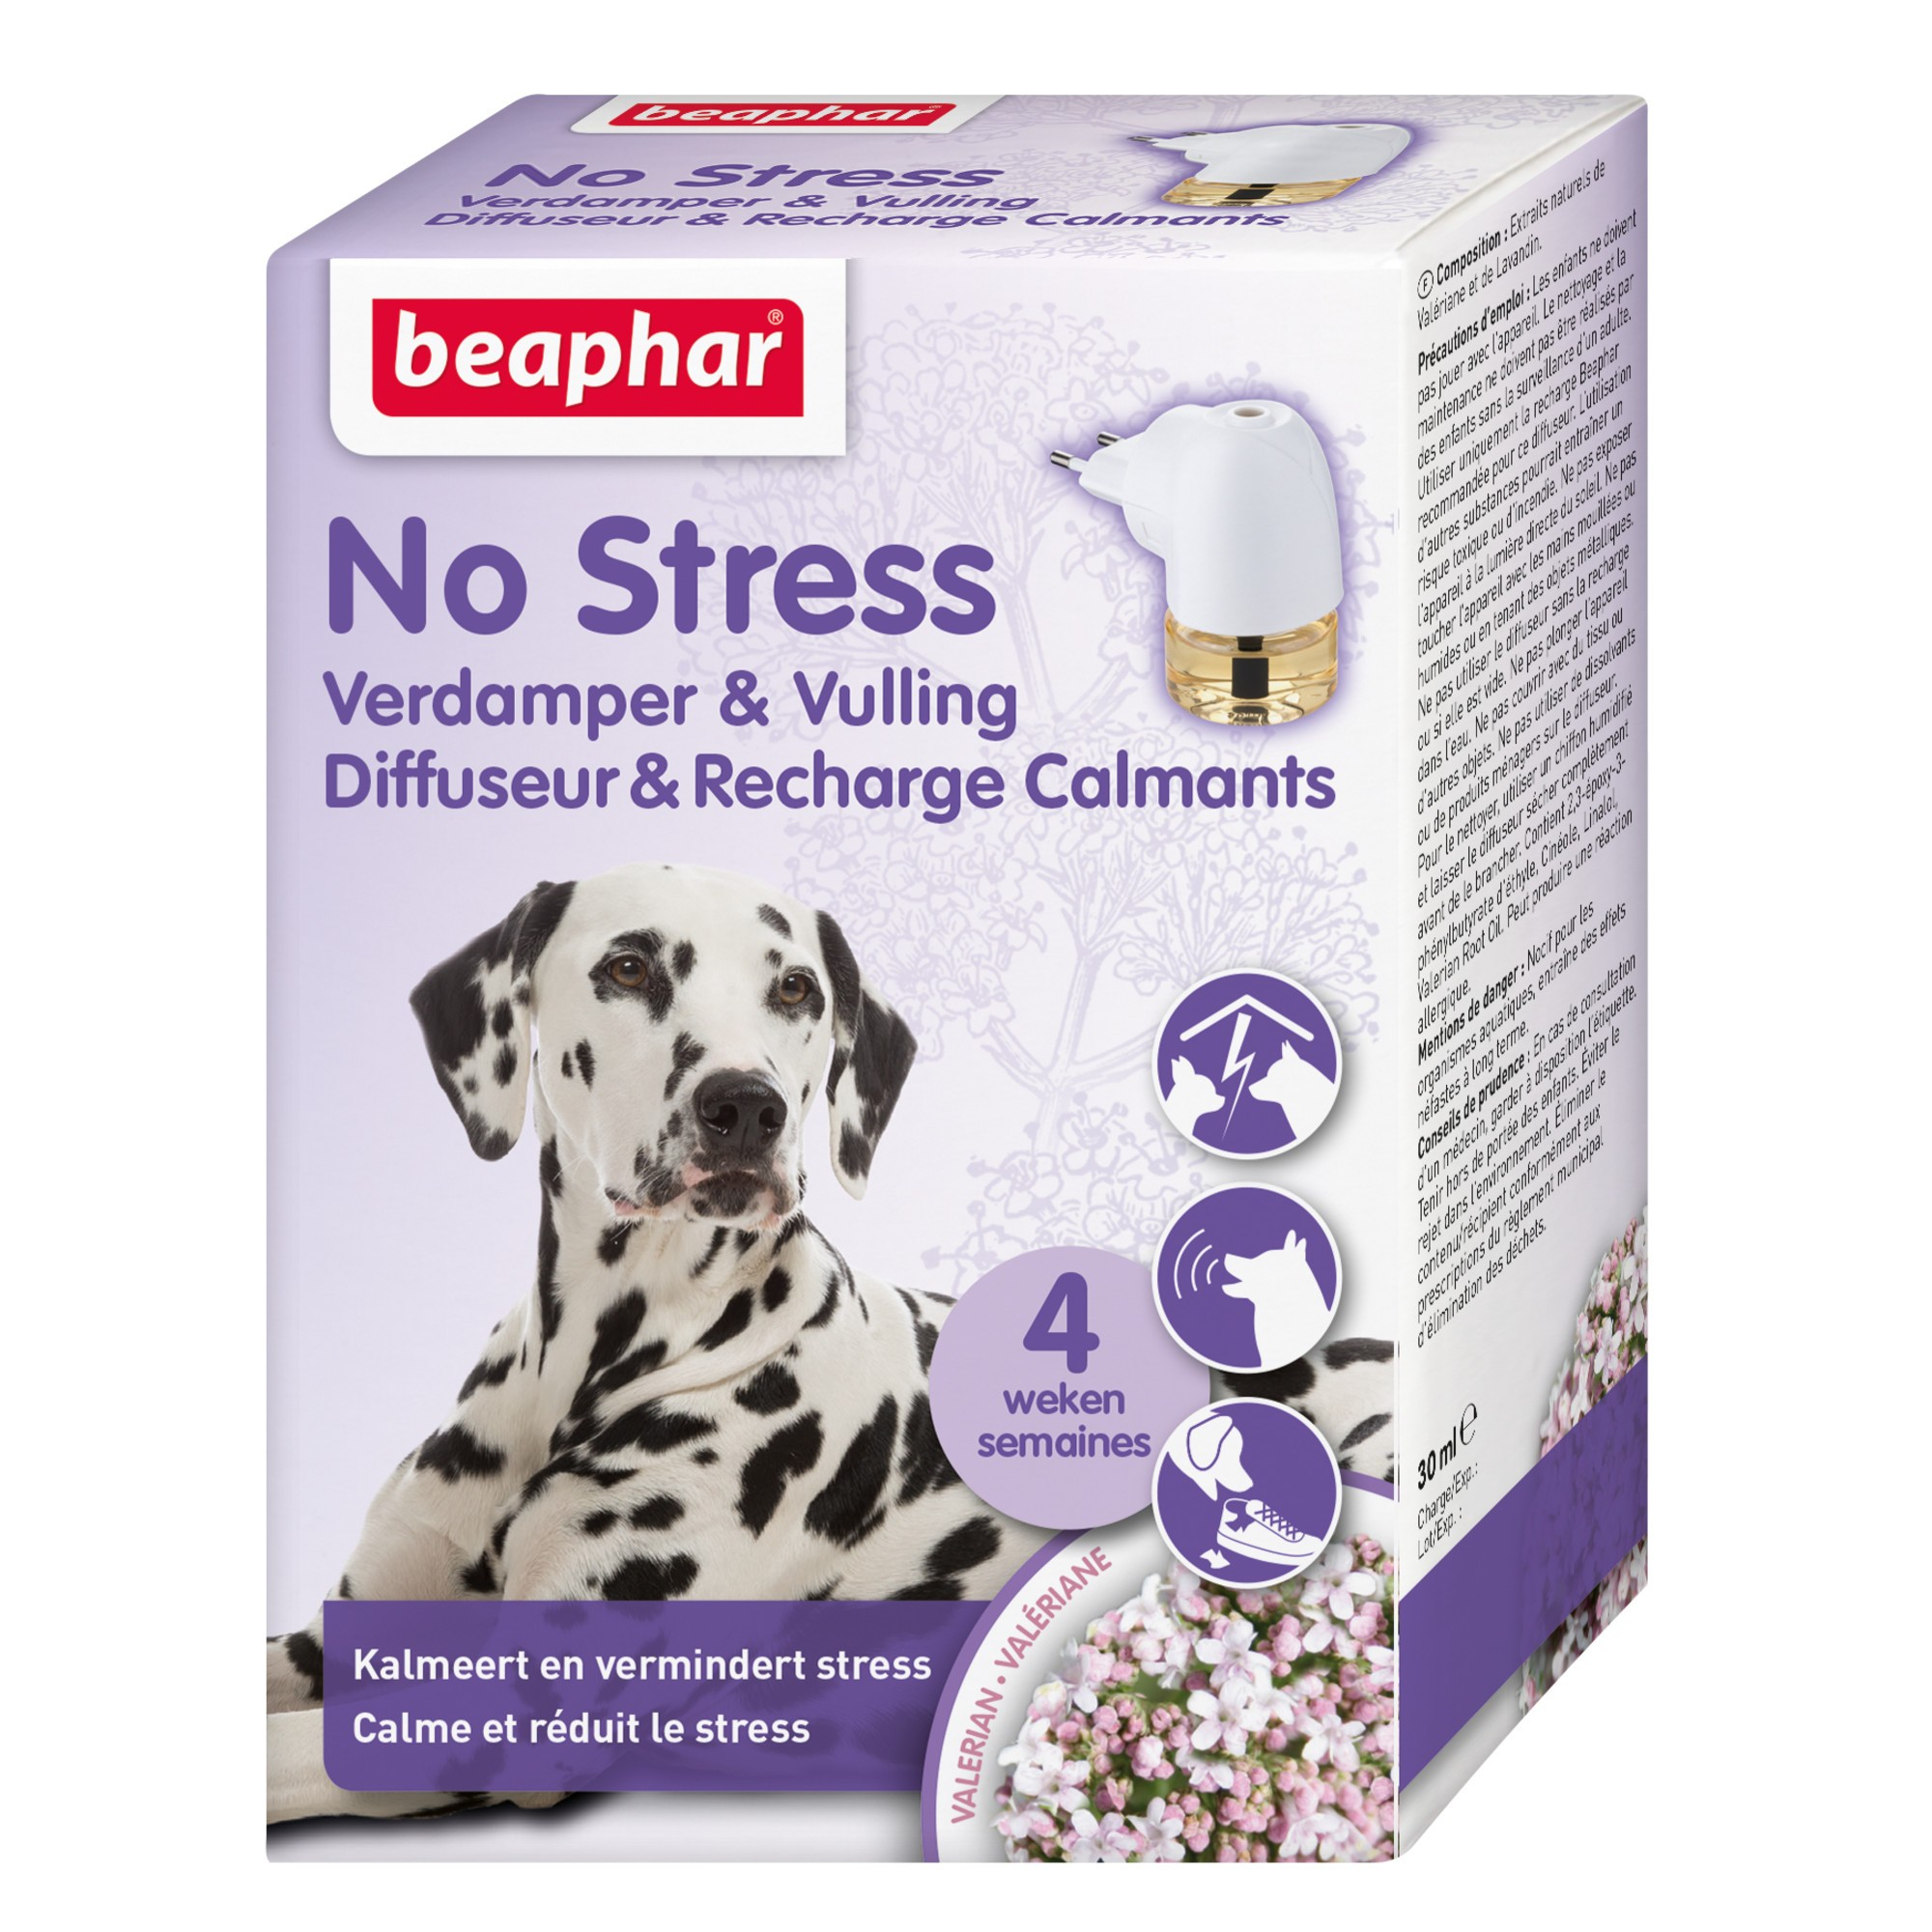 Beaphar No Stress verdamper en vulling 30 ml